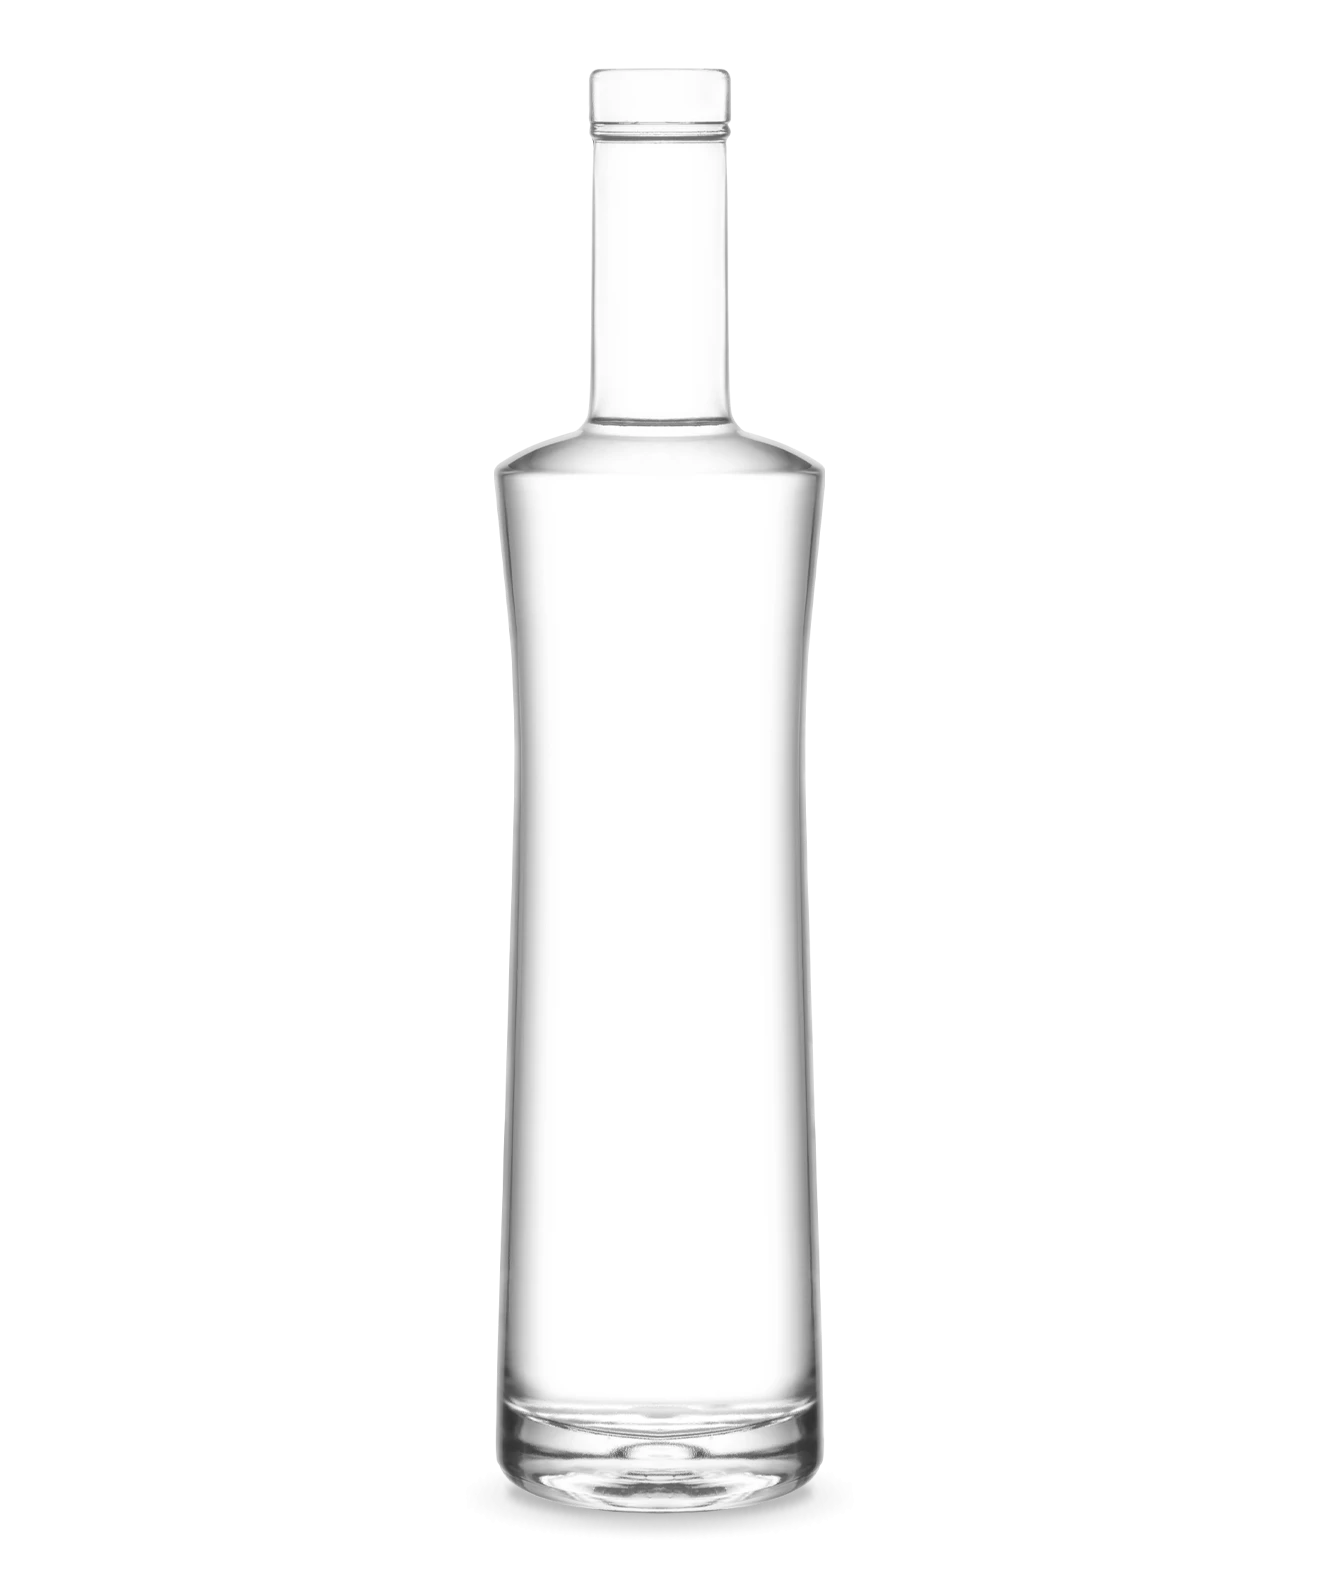 MINGEI Archive Spirits bottles Vetroelite View 1